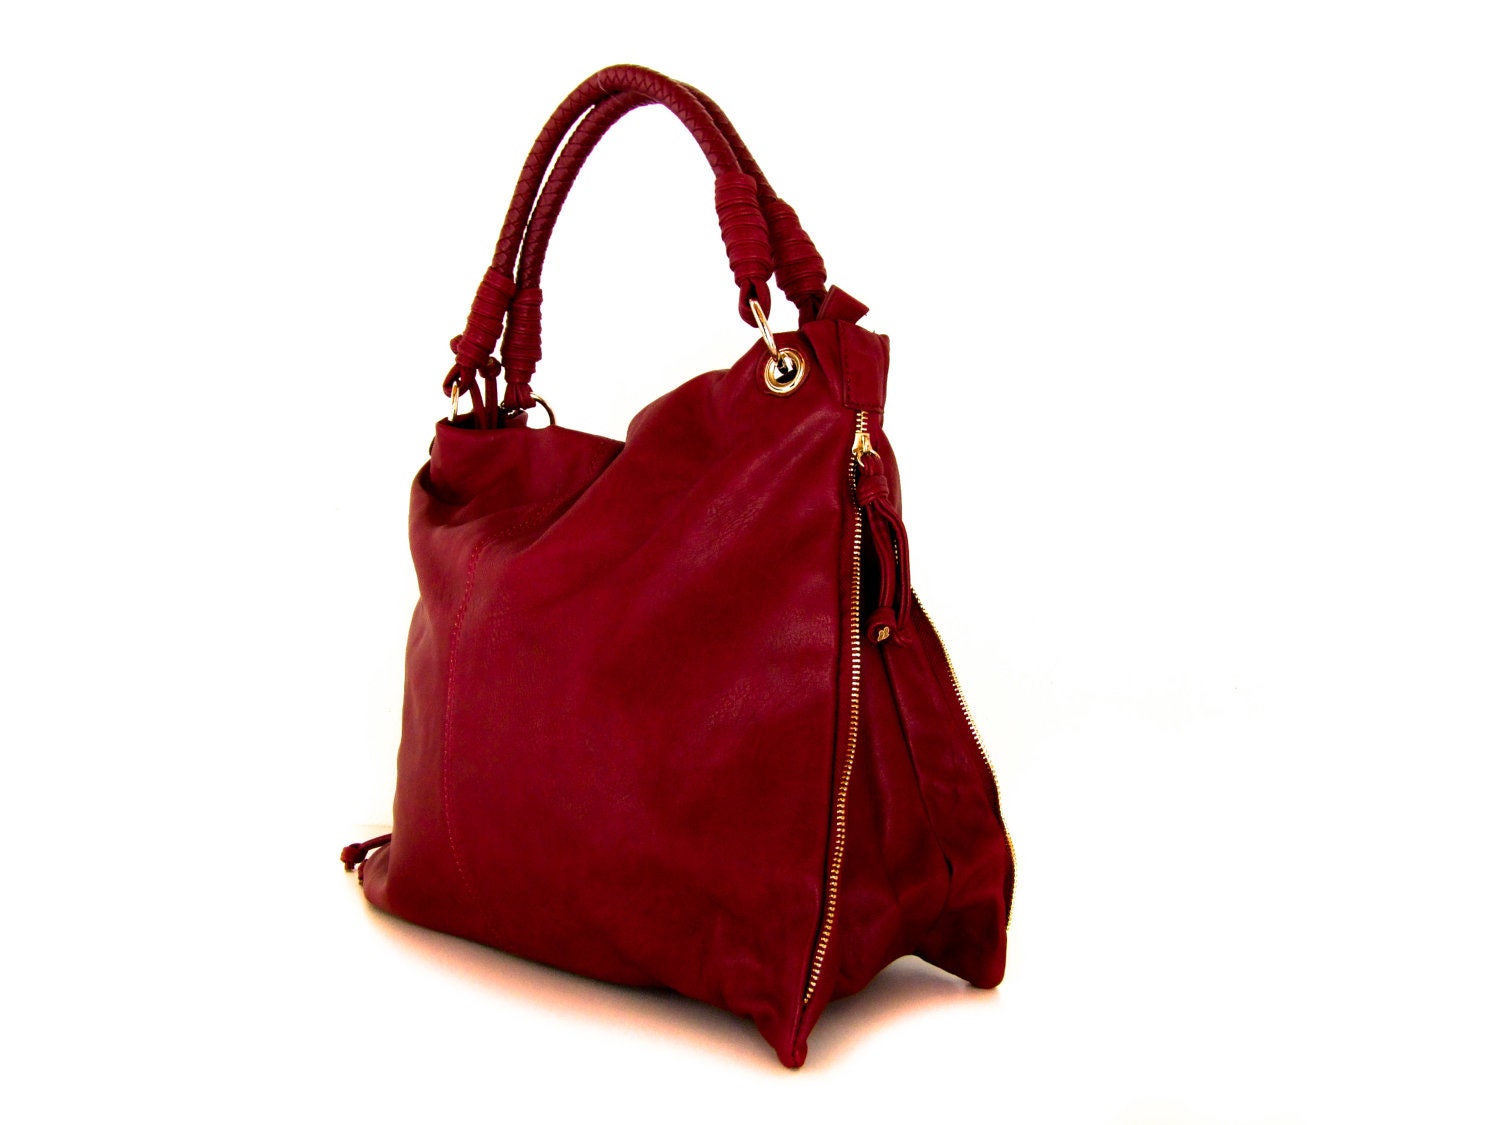 vegan leather handbag purse deep red the by VeganLeatherHandbags